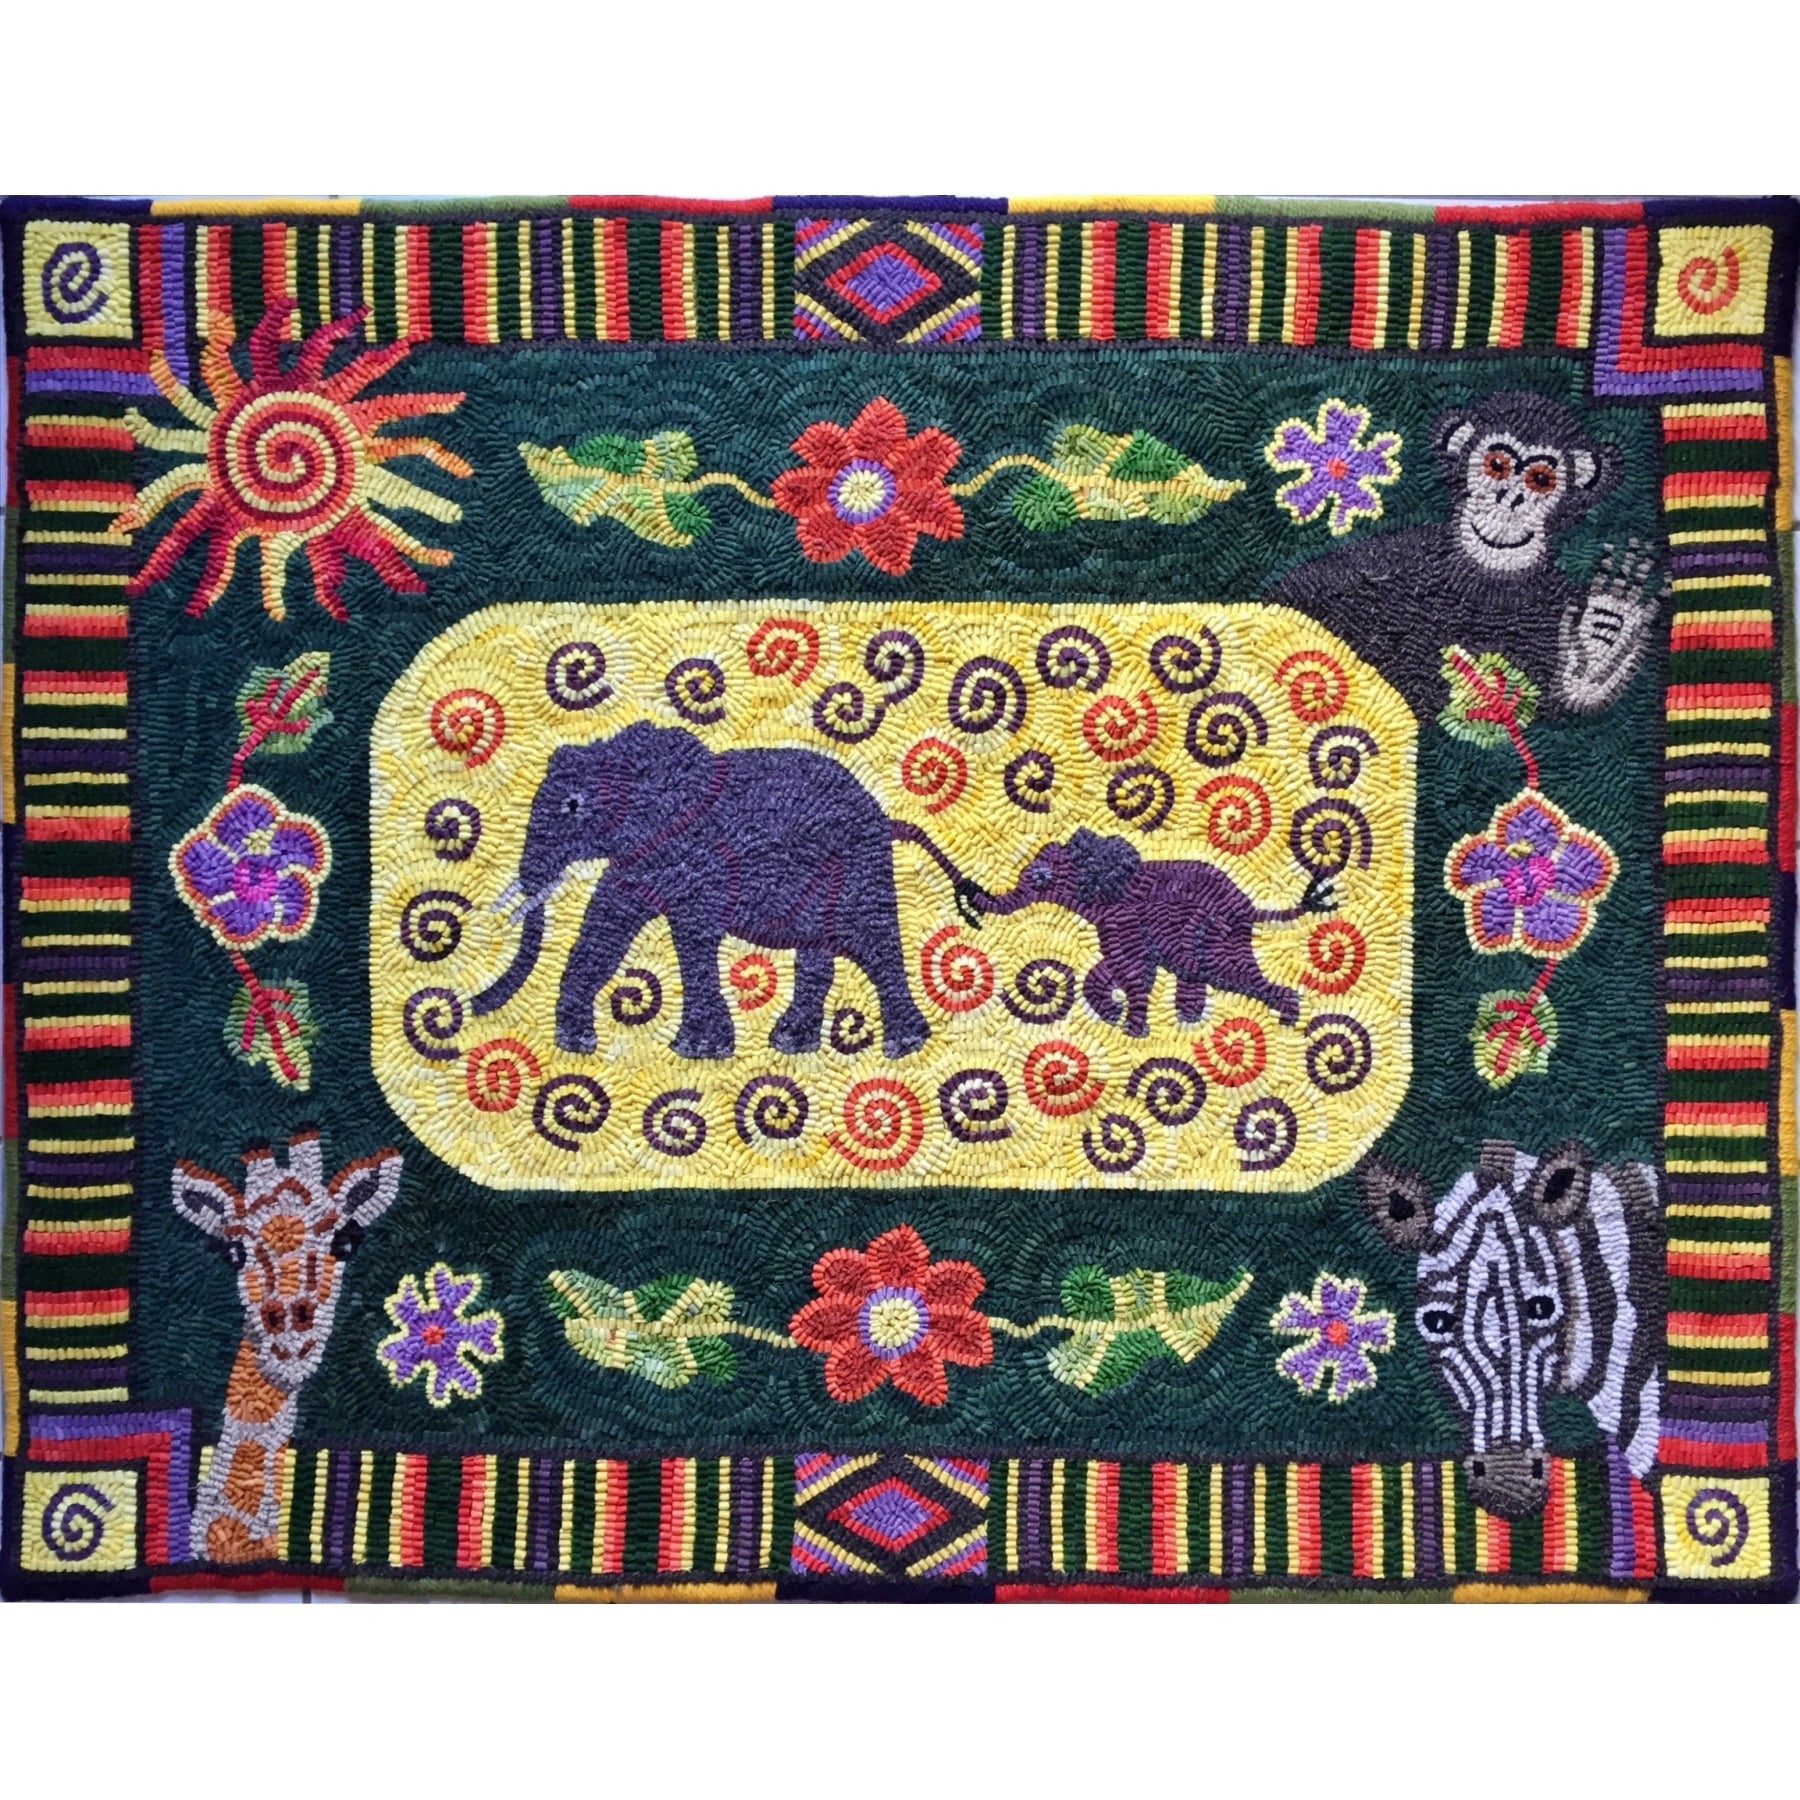 Africa, rug hooked by Delaine Miller